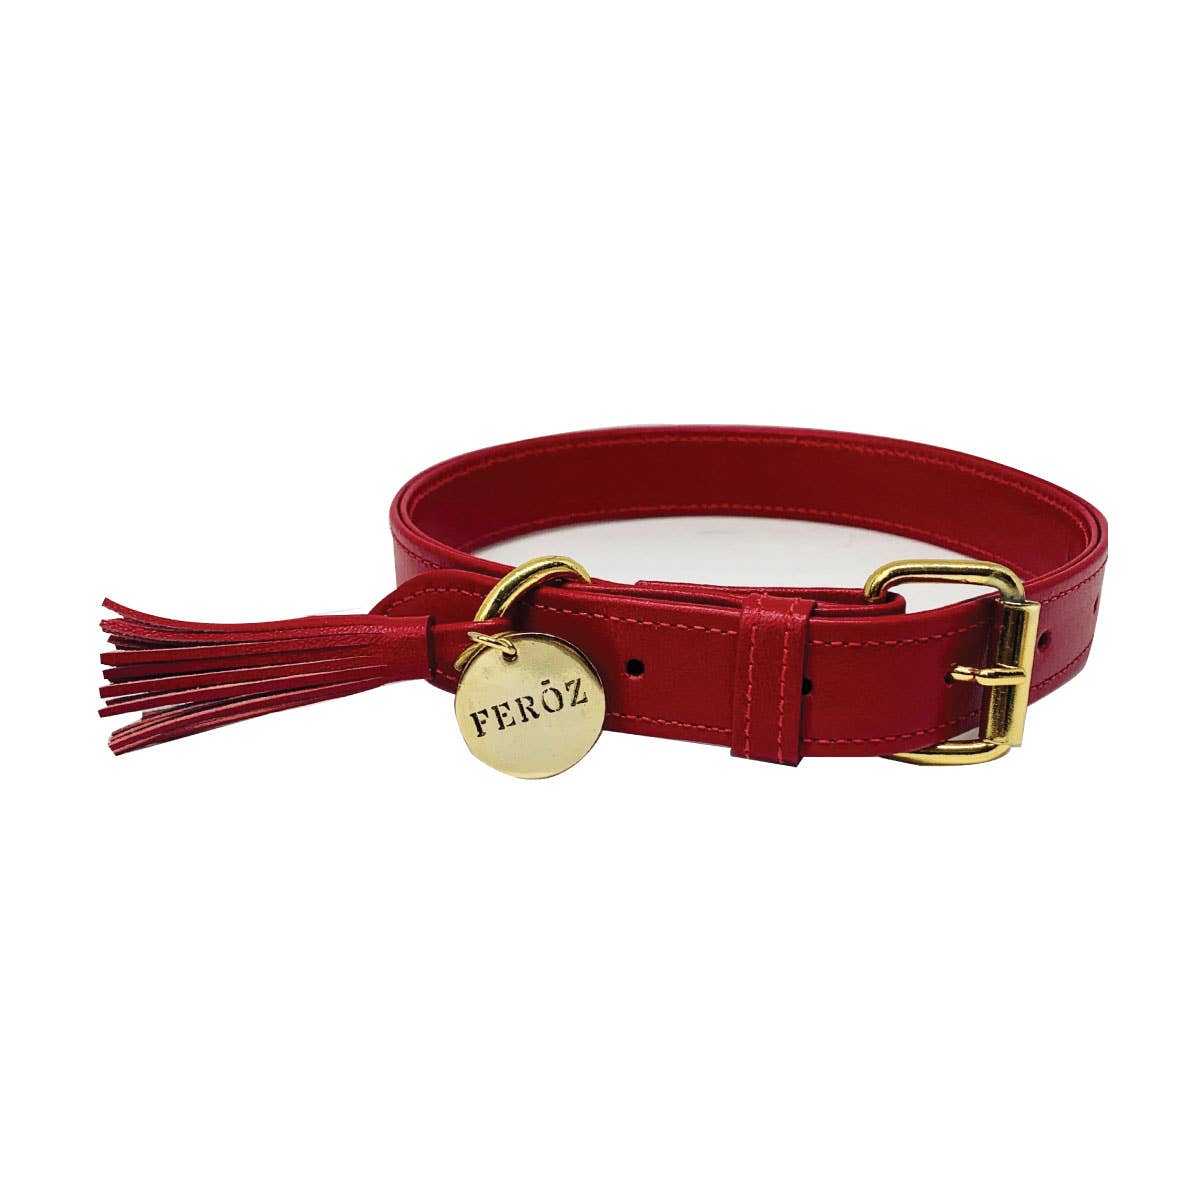 Feroz Scarlet Red Leather Collar